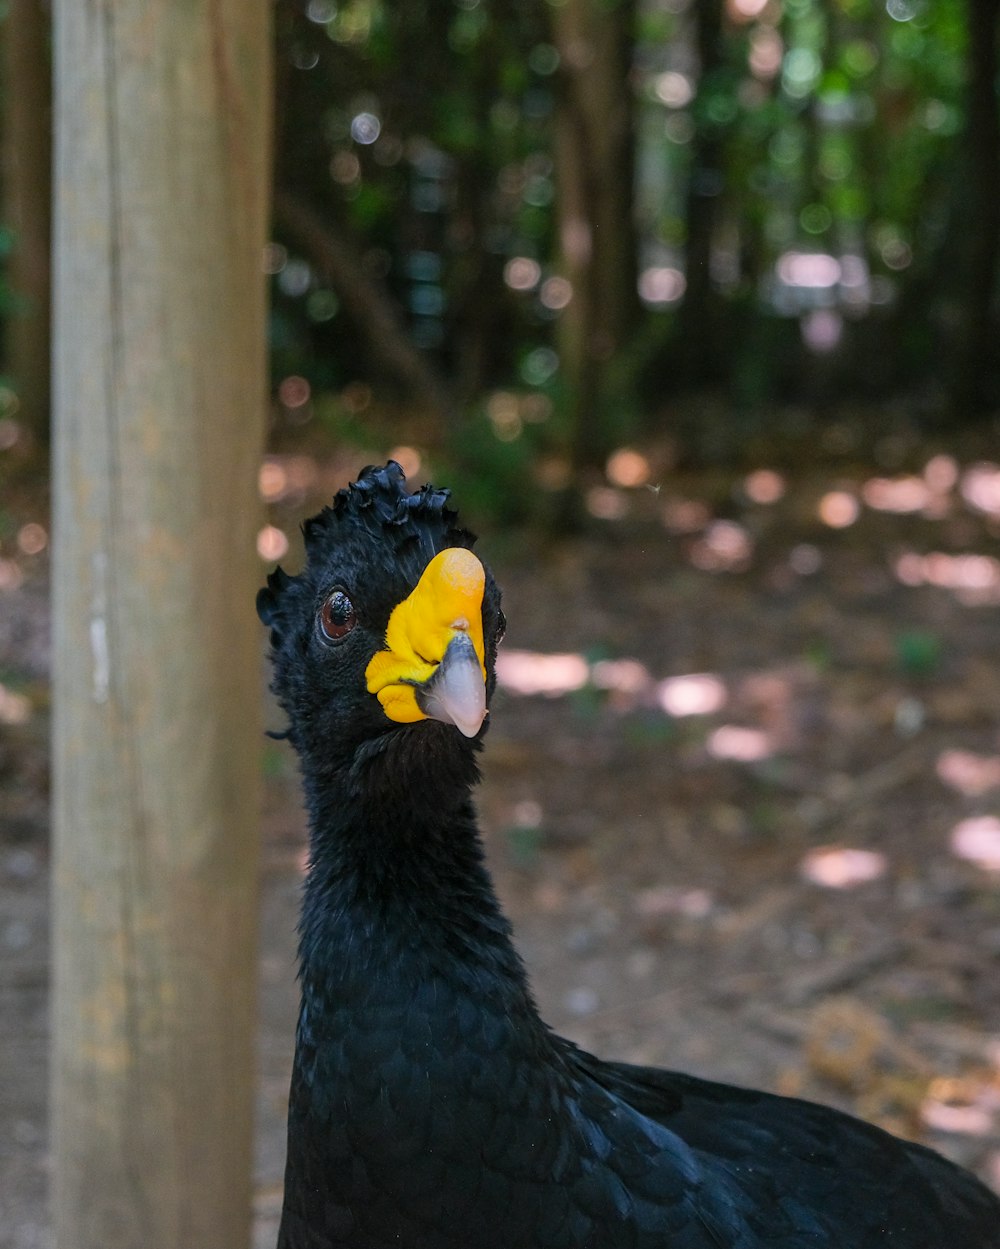 a large black bird with a yellow beak